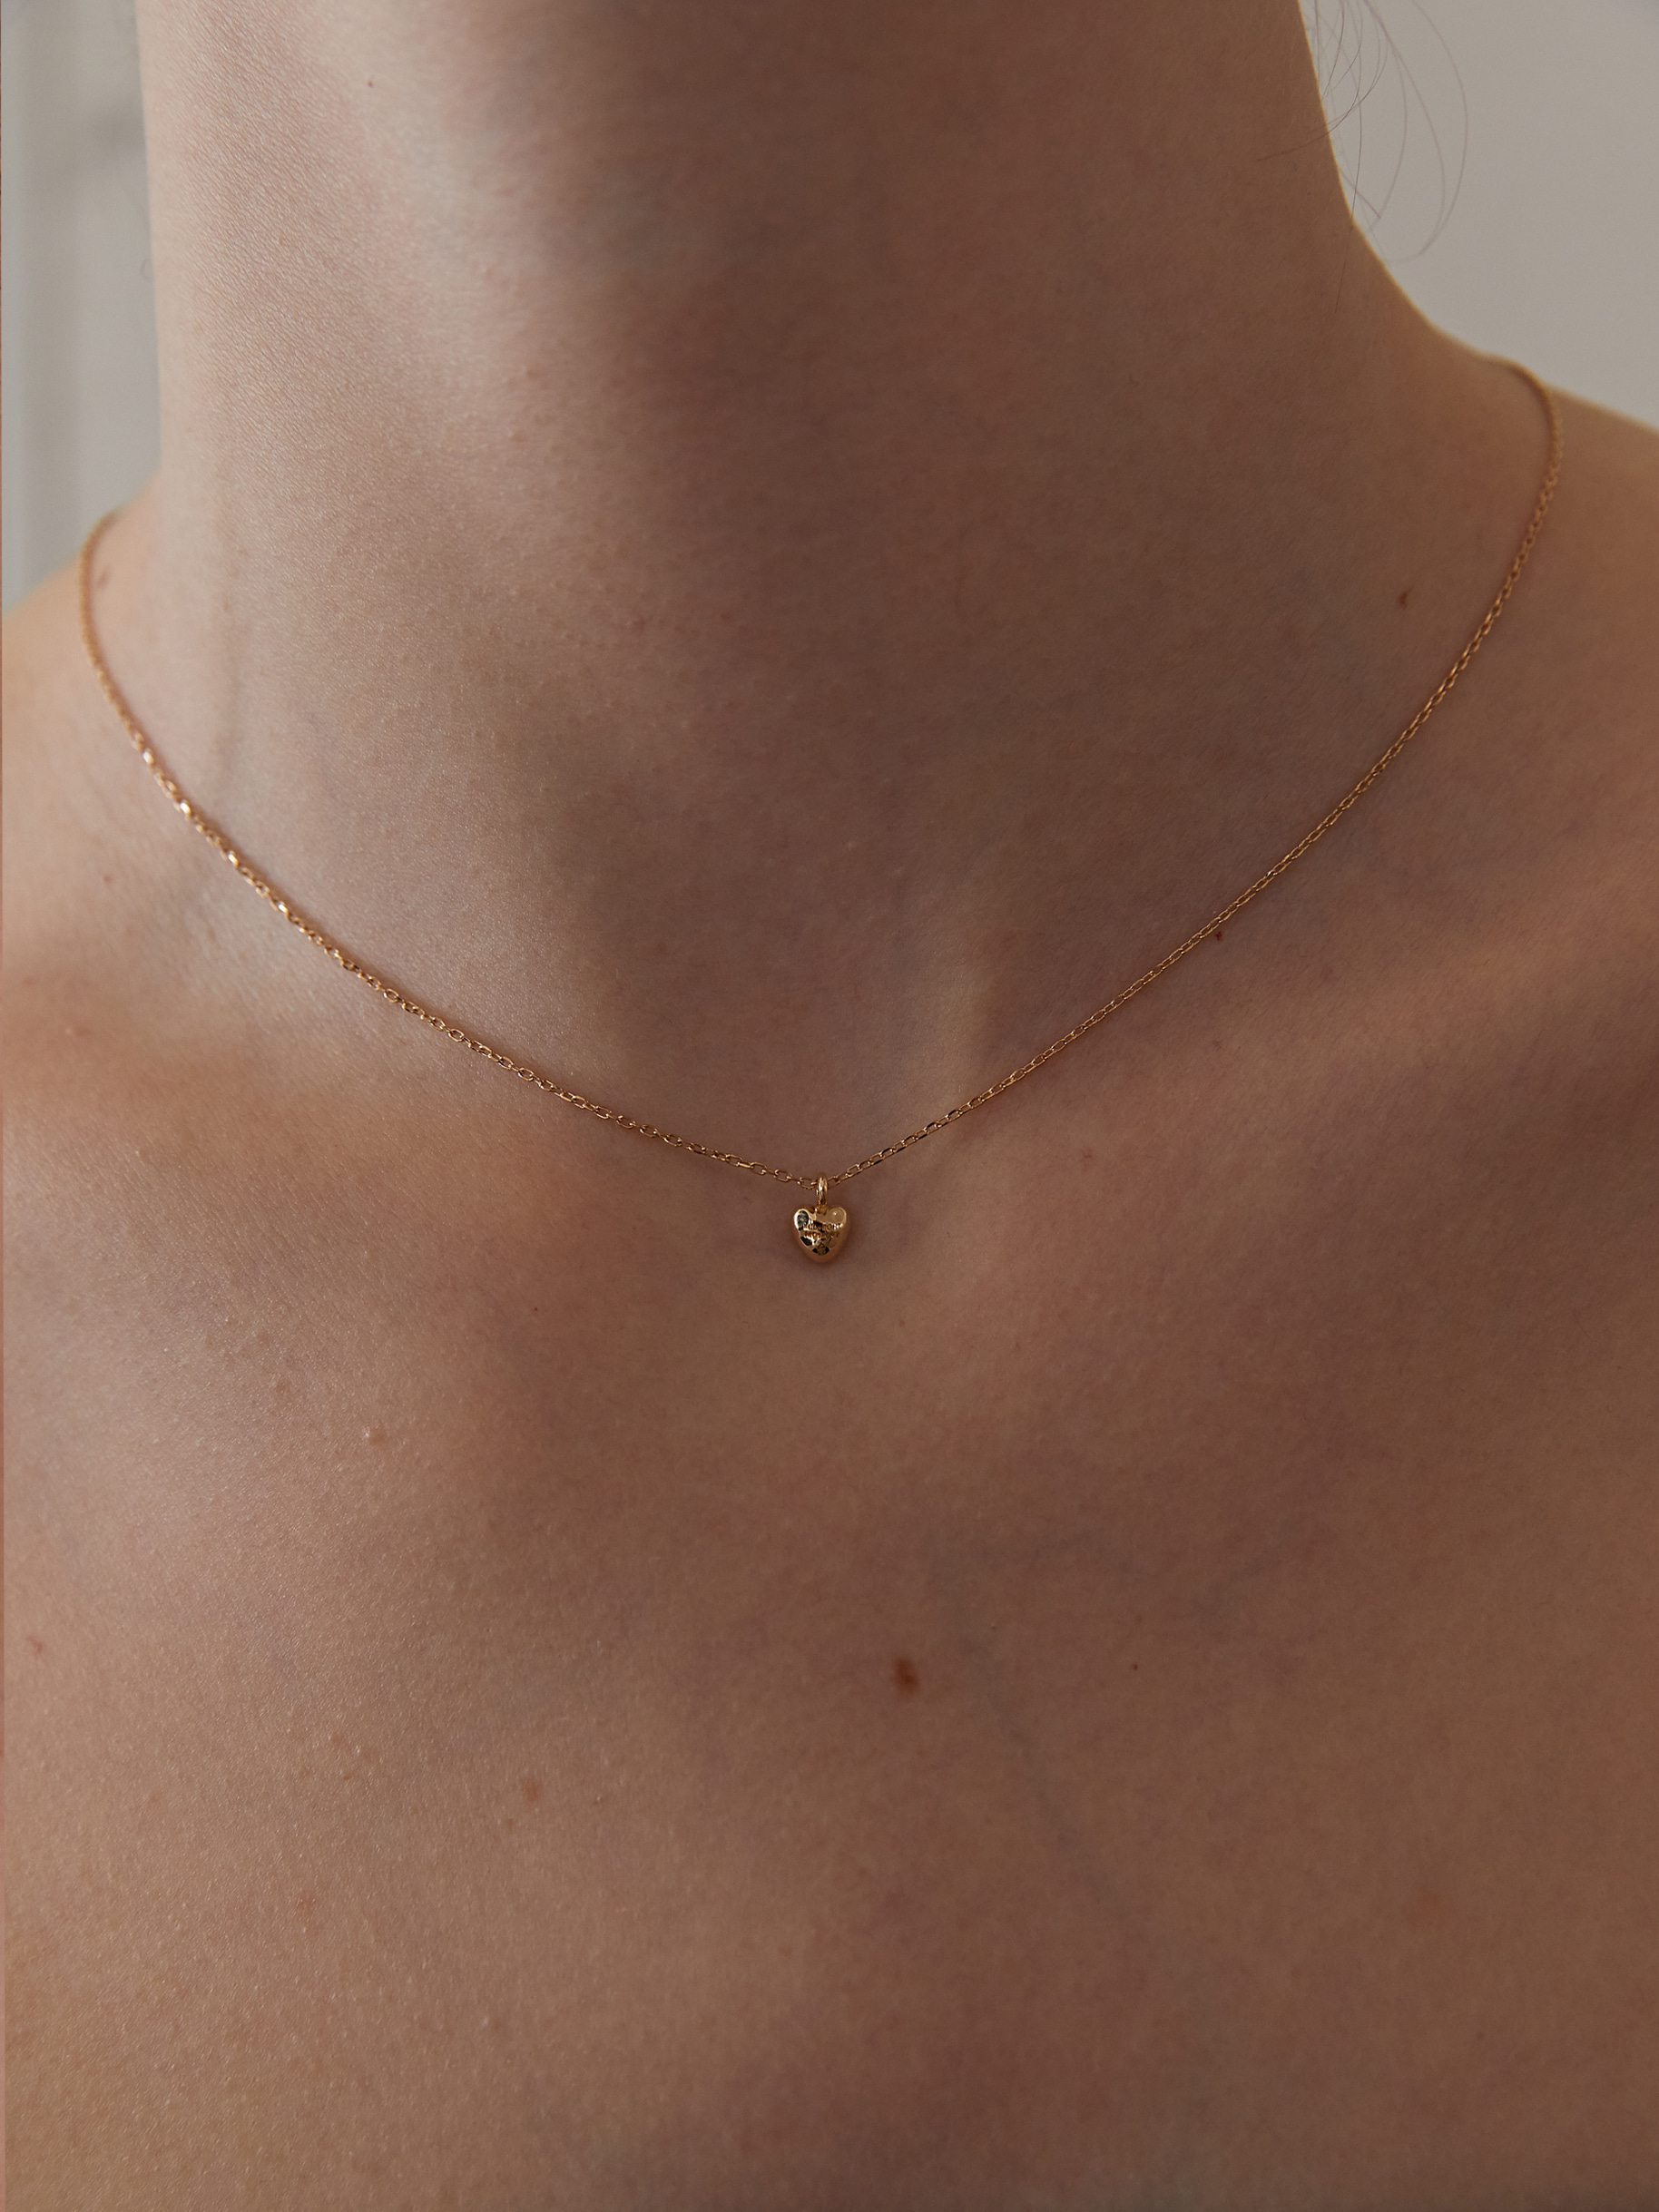 [Exclusive] 14k love necklace